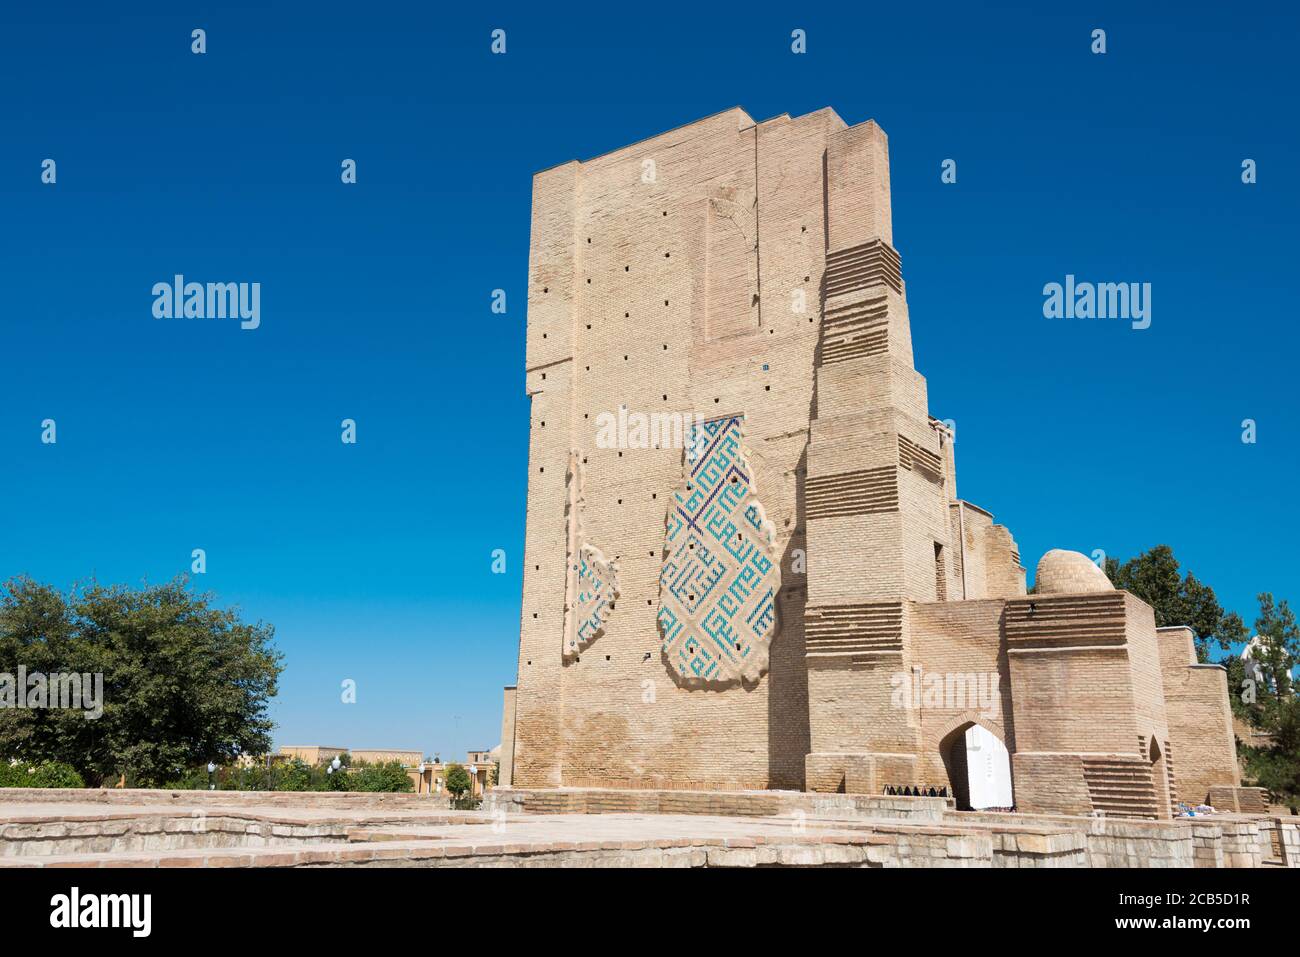 Shakhrisabz, Uzbekistan - complesso Mausoleo Dorus-Saodat a Shakhrisabz, Uzbekistan. E' parte del Sito Patrimonio Mondiale dell'Umanita'. Foto Stock